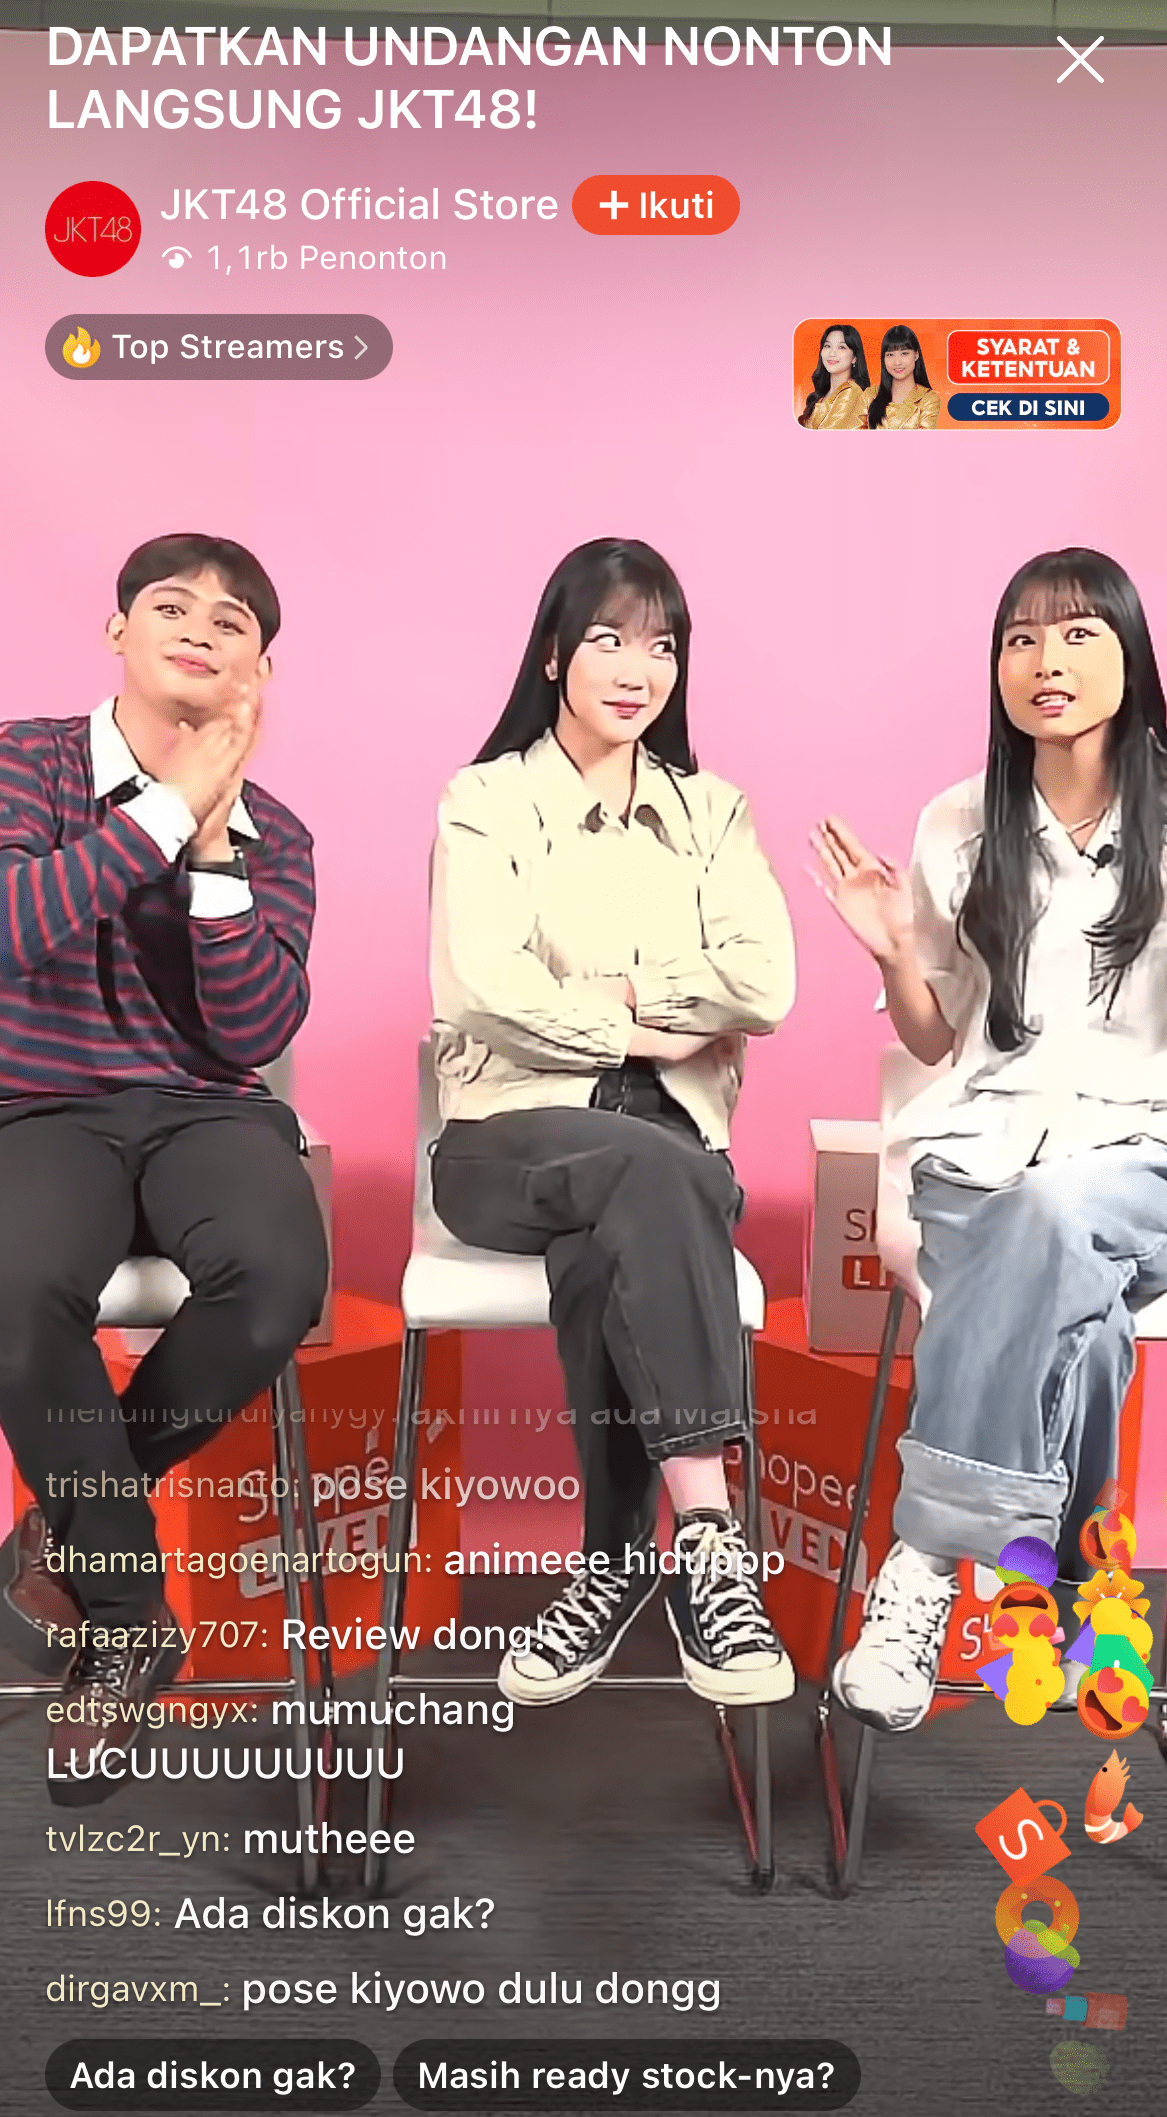  Marsha dan Muthe JKT48 meramaikan sesi Live Streaming di Shopee Live.